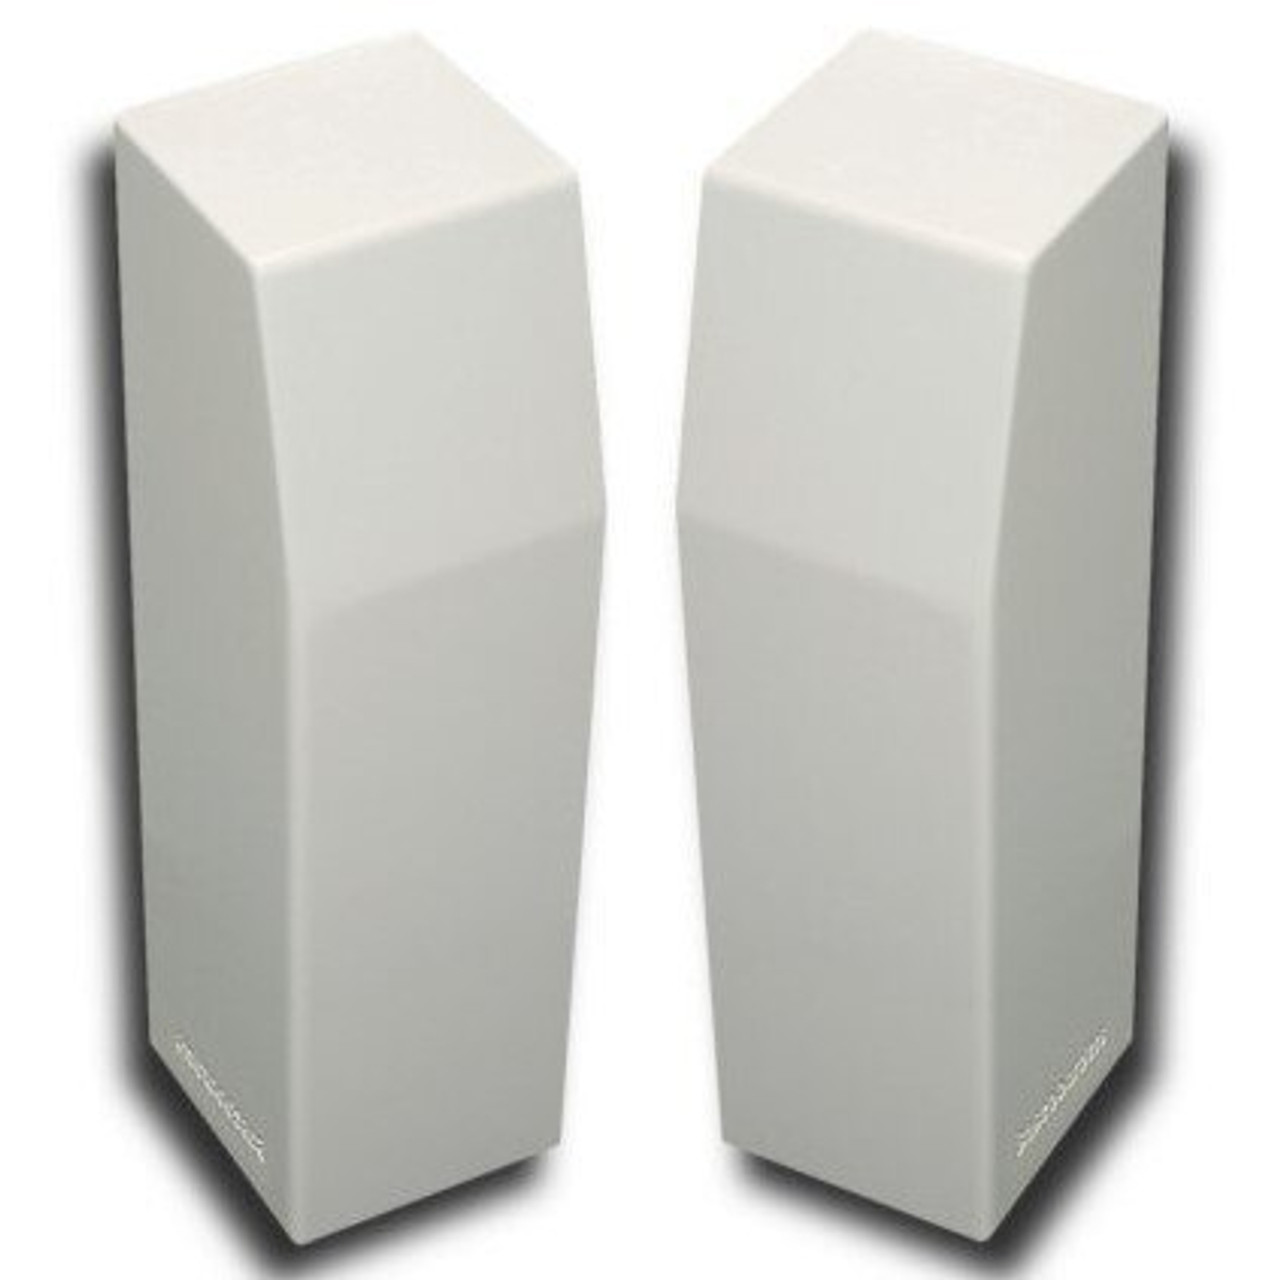 Premium Tall Baseboard Heater Covers - Slip On